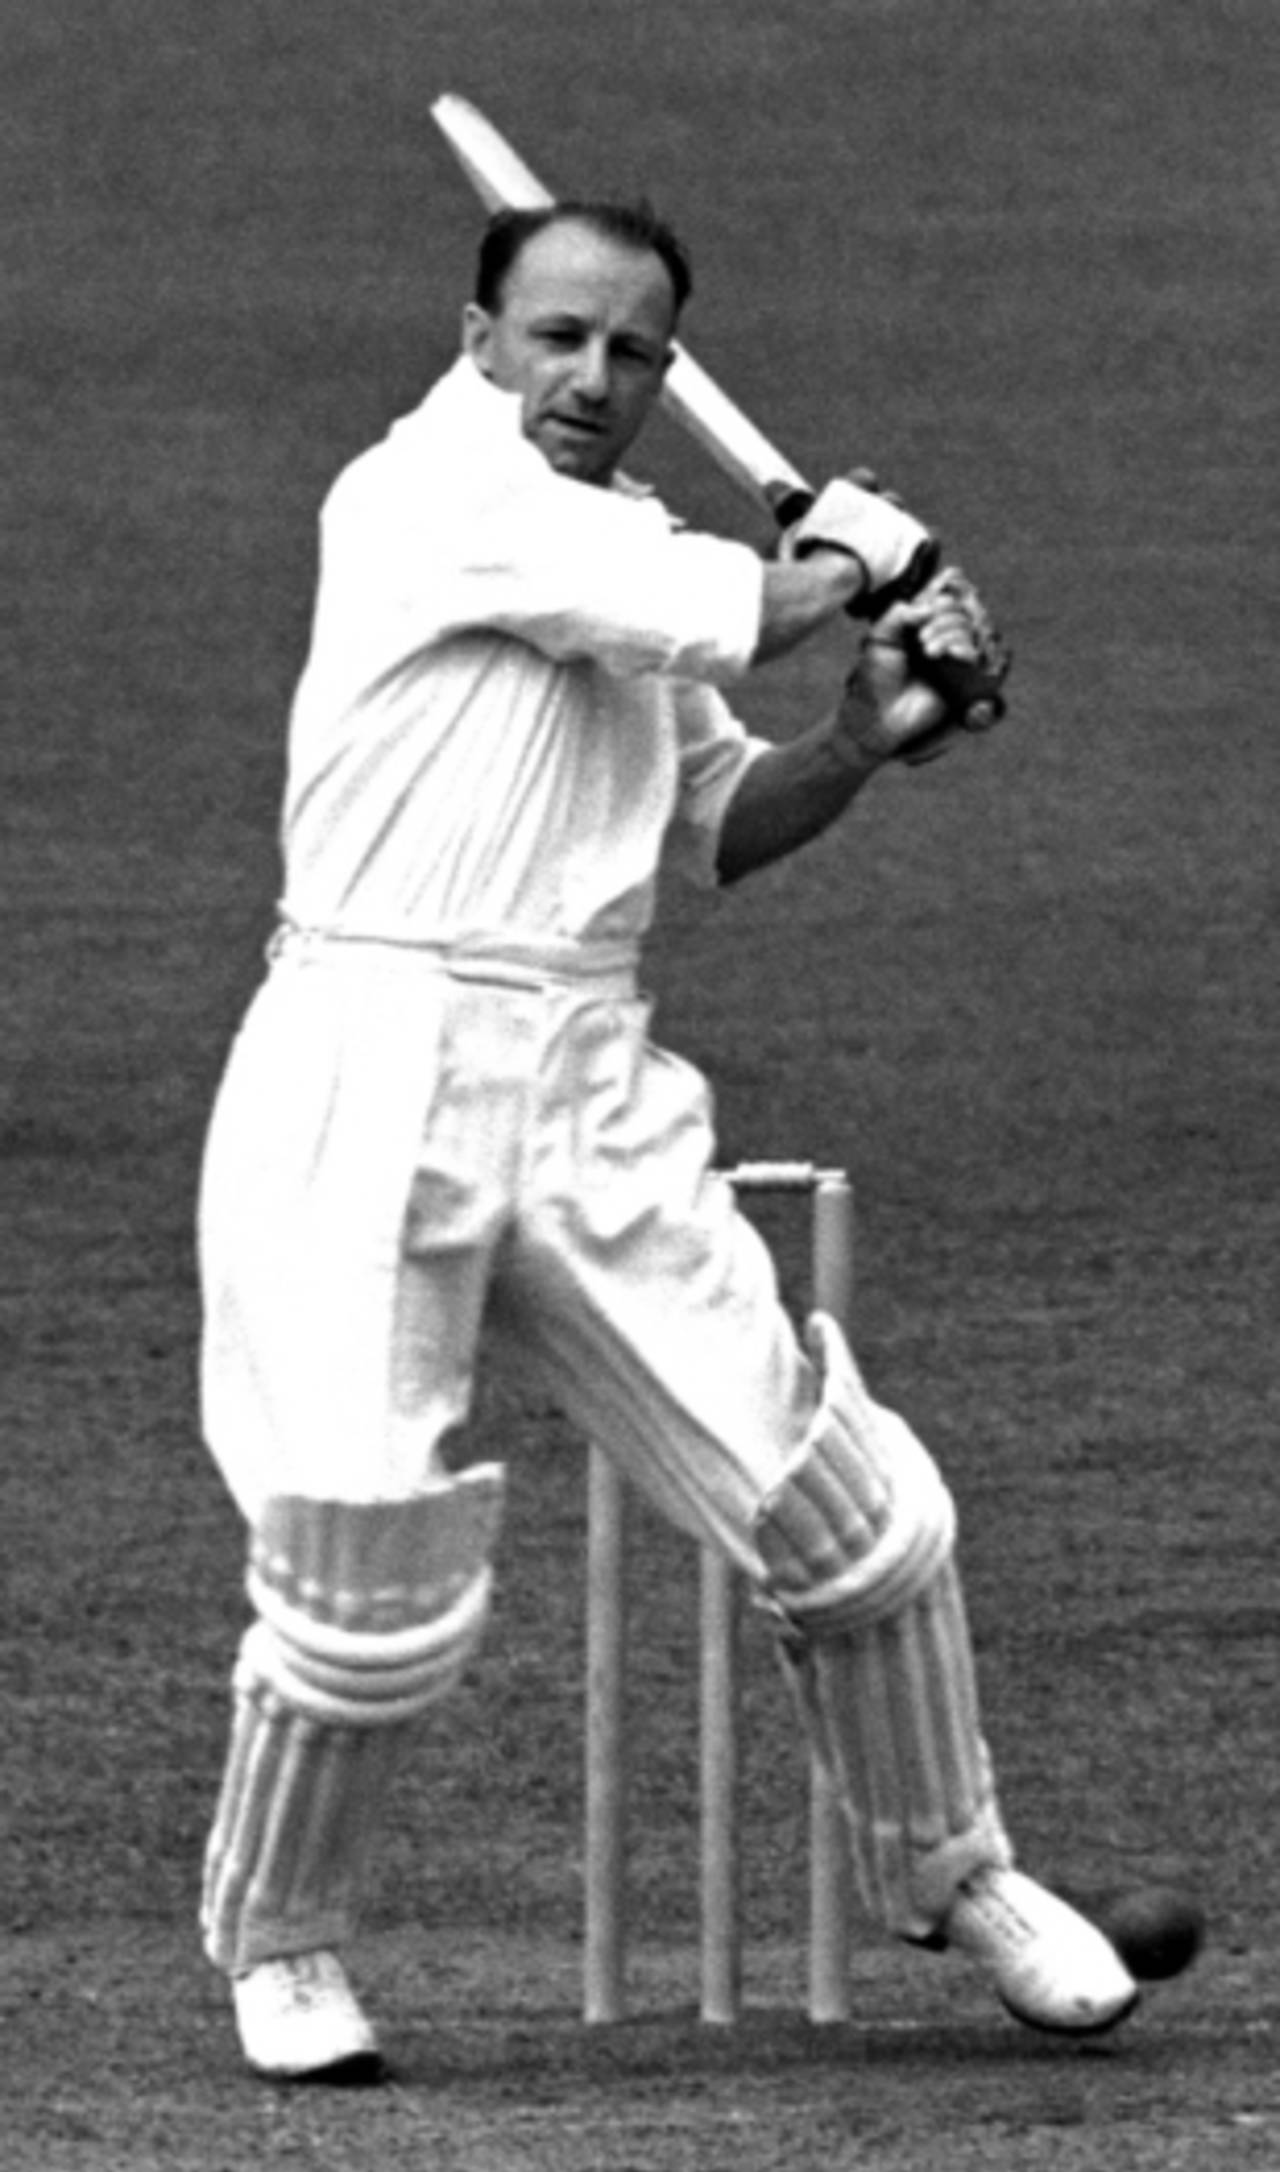 Don Bradman batting, England v Australia, Trent Bridge, June 11, 1948